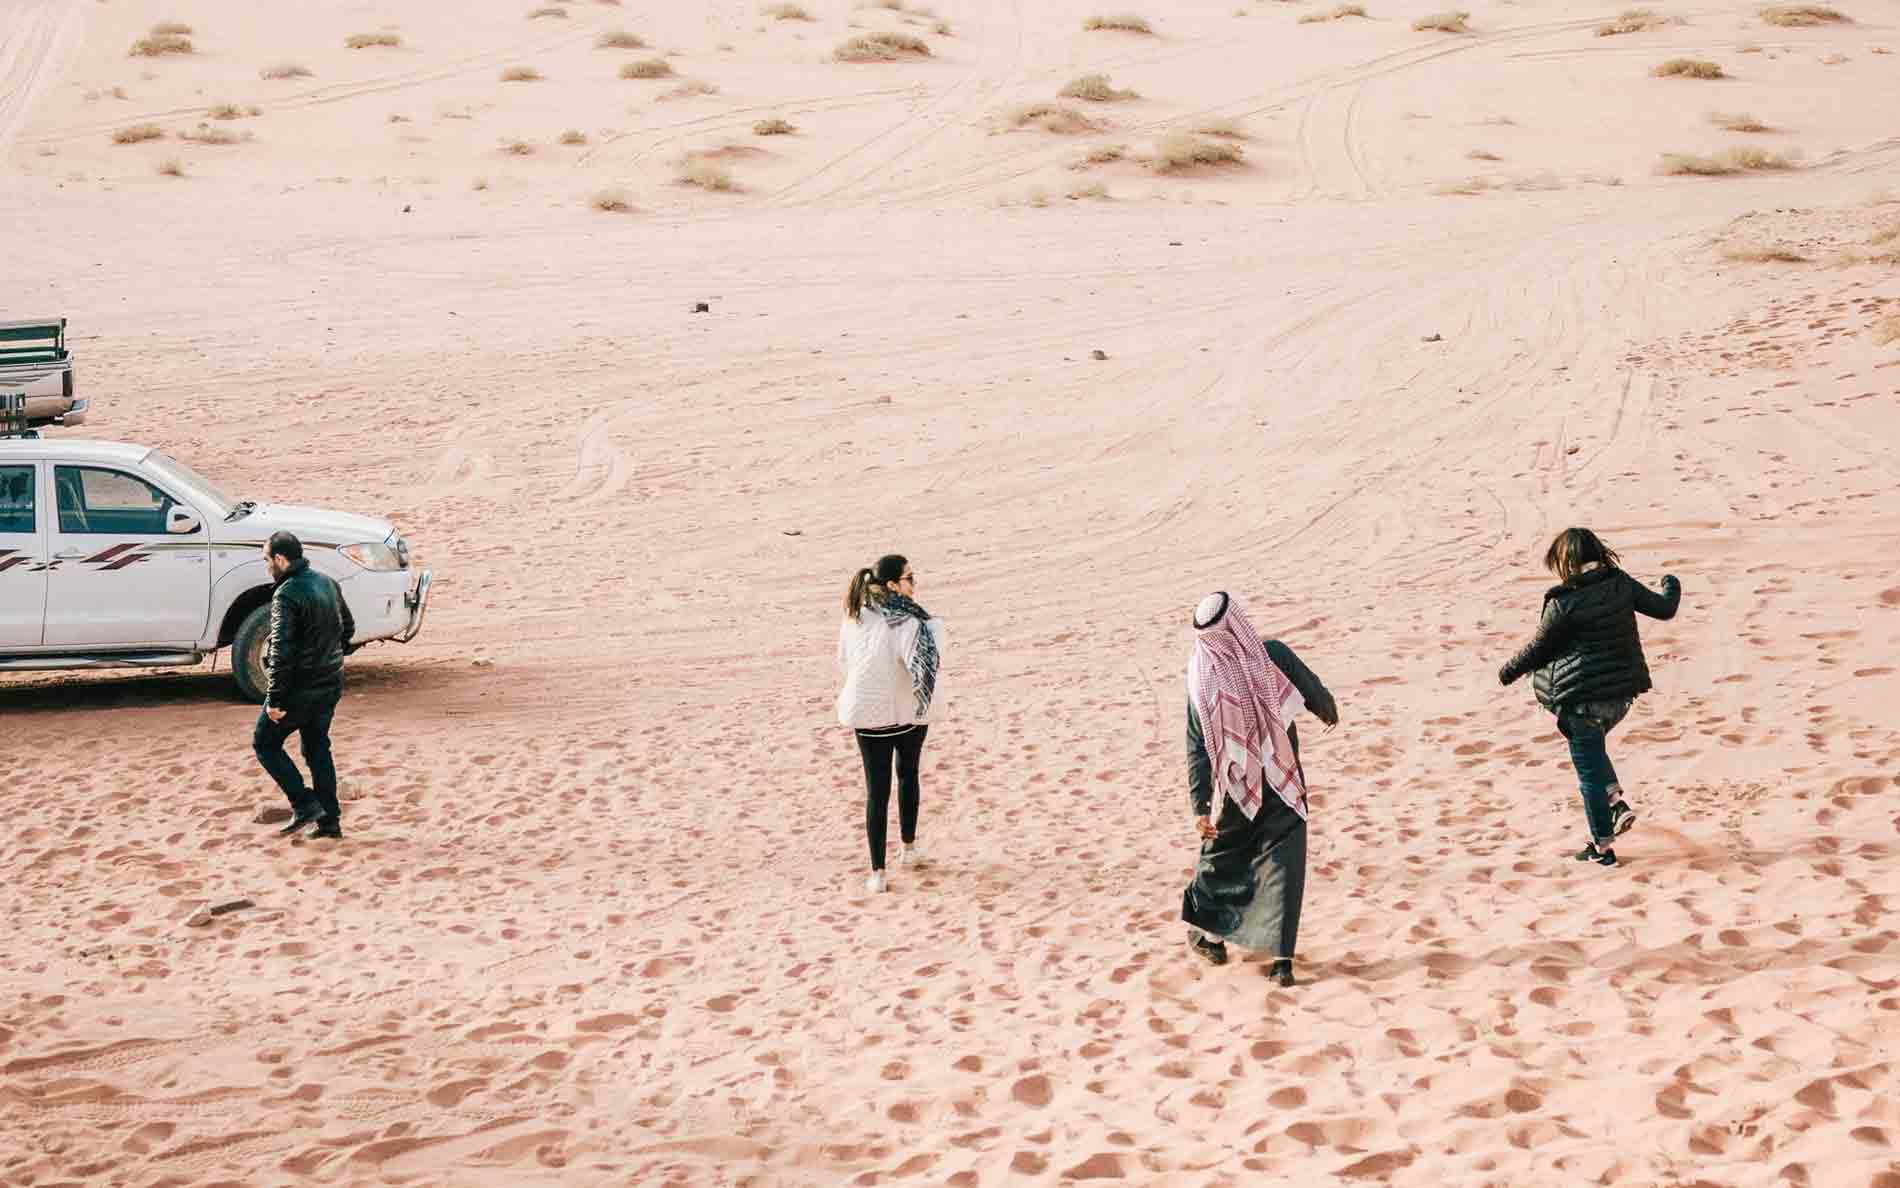 People walking down sand dune in desert